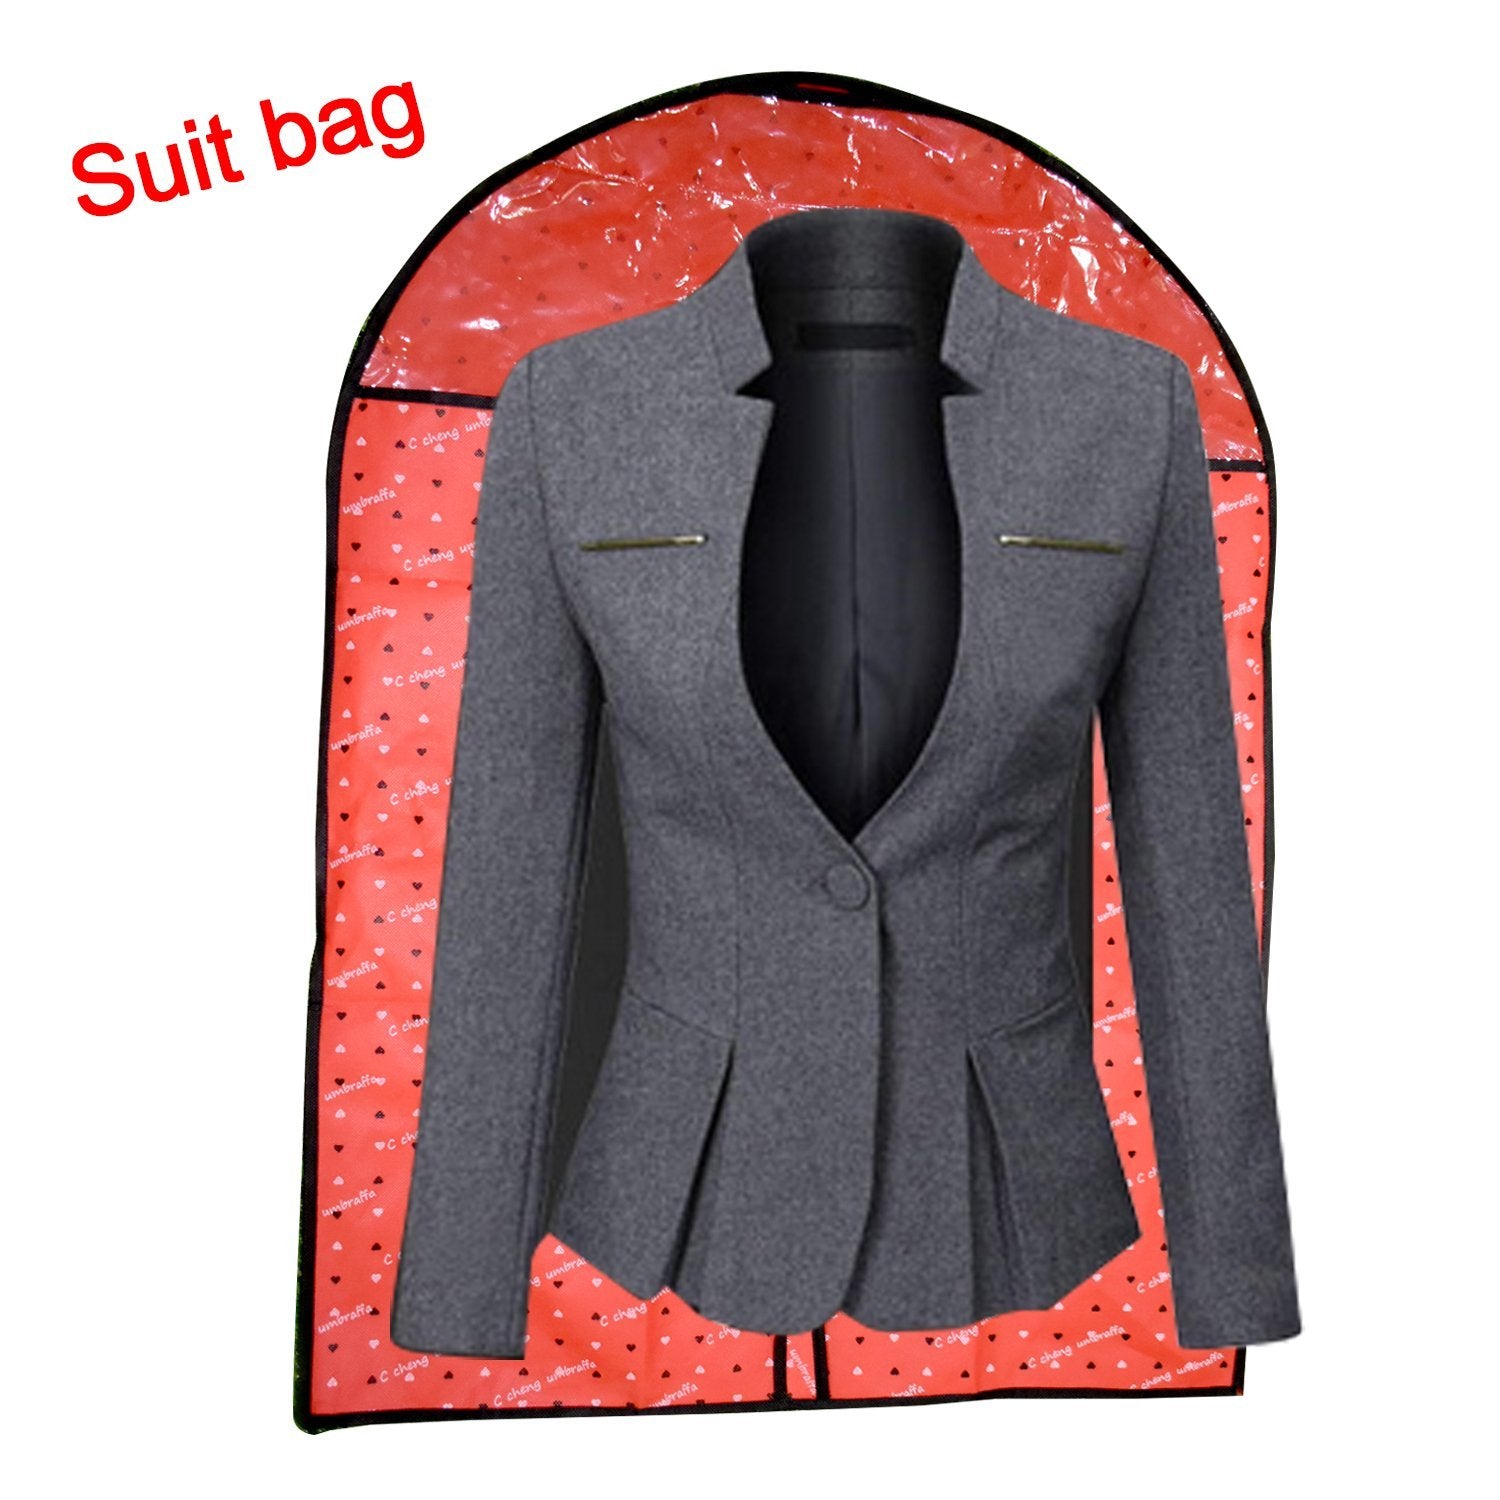 6021 Men's Coat Blazer Cover Foldover Breathable Garment Bag Suit Cover